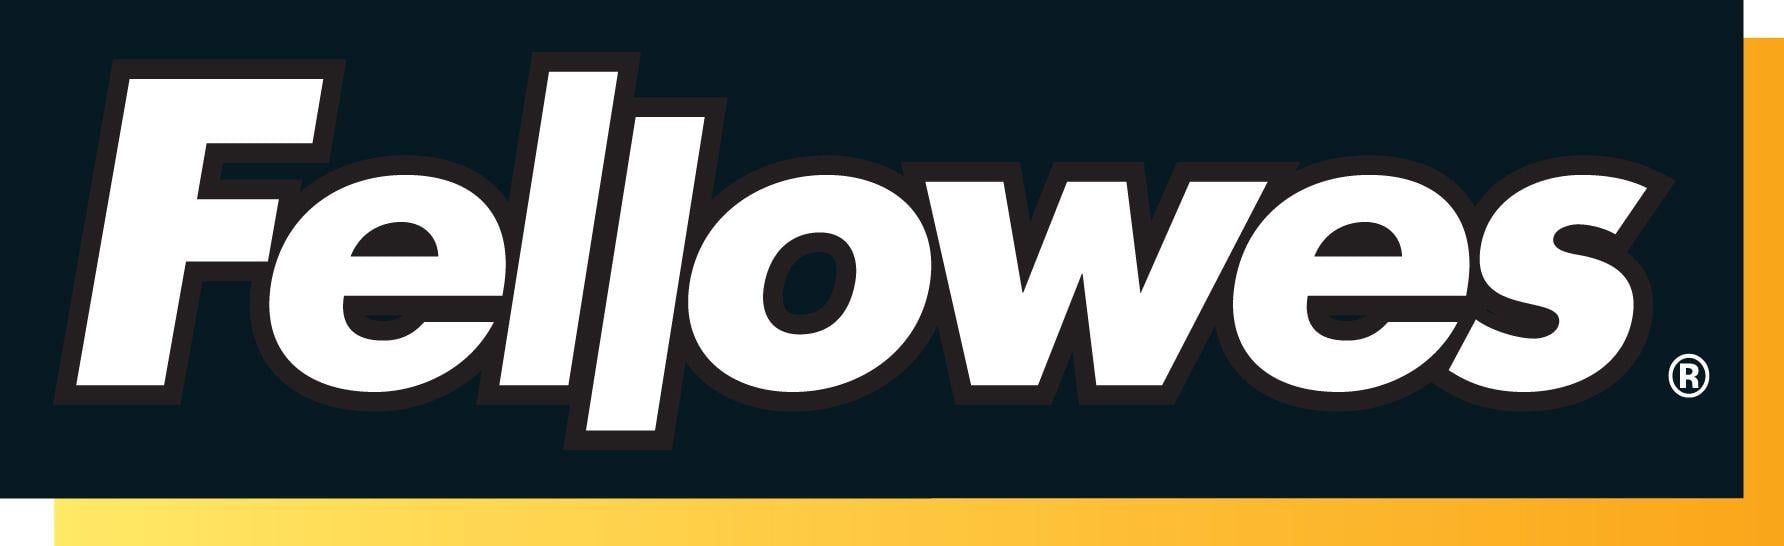 Fellowes Logo - Fellowes | Brands We Love! | Logos, Company logo, Nintendo wii